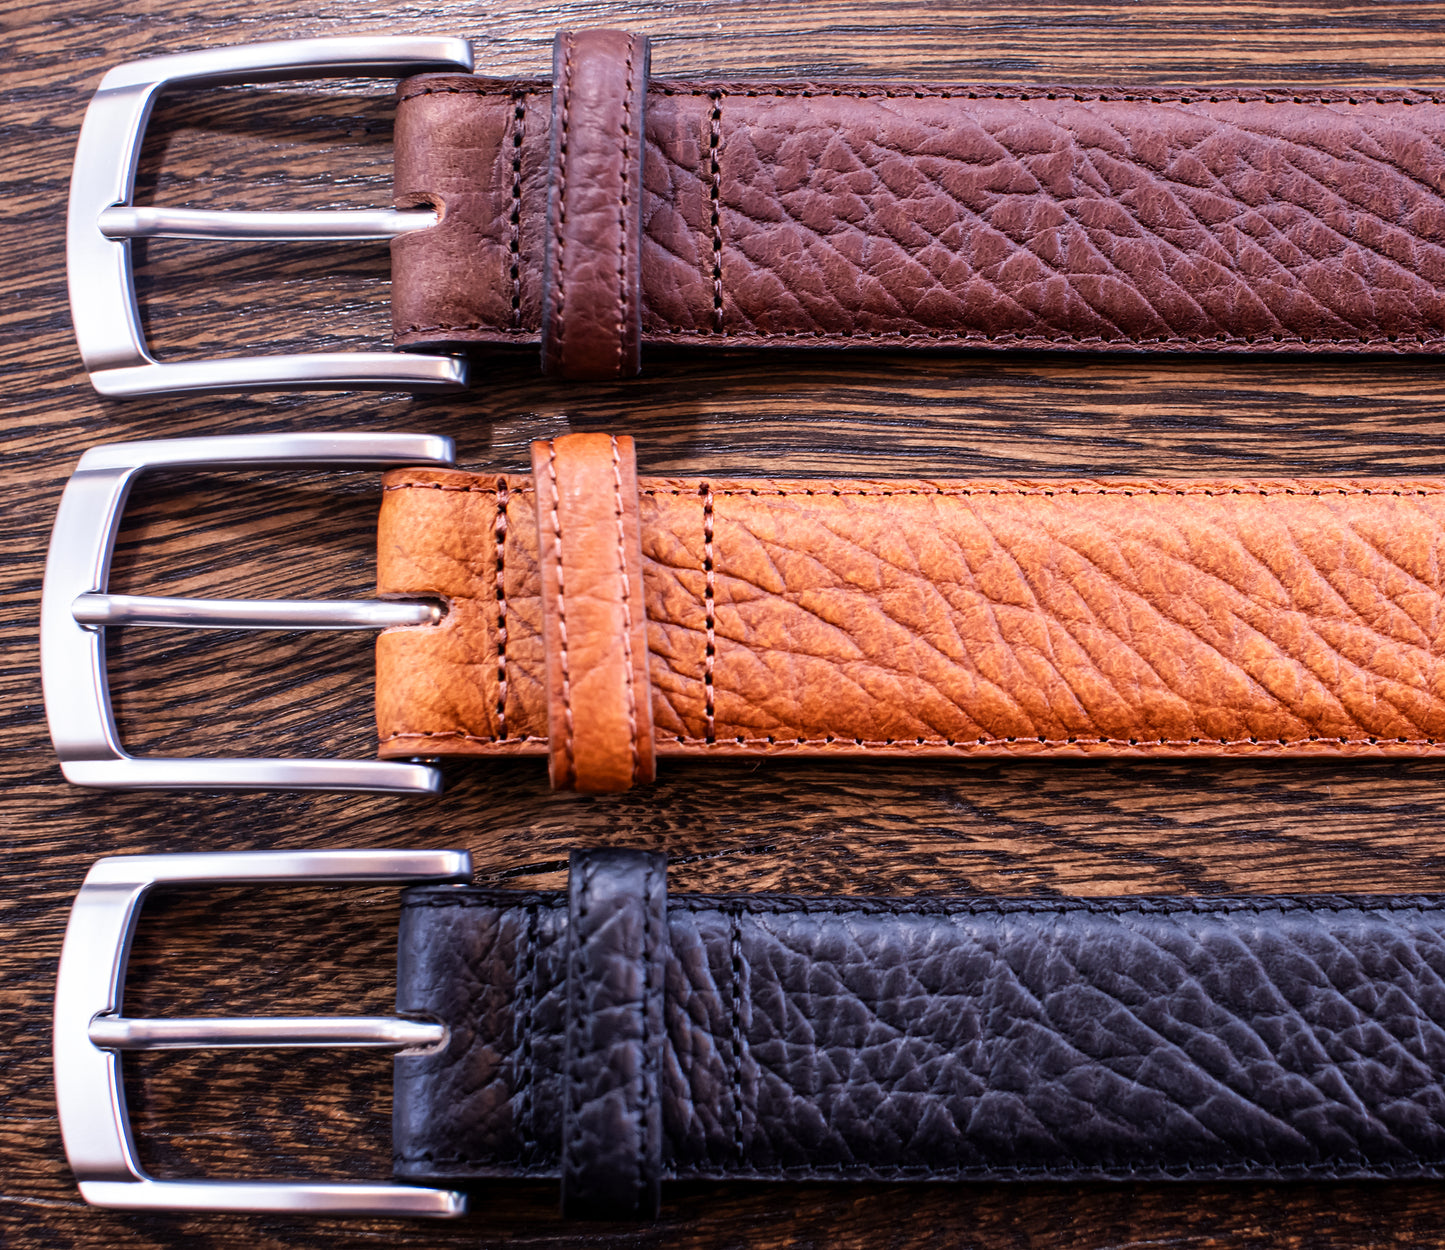 Buffalo Leather Shrunken Leather Dress Belts - Black, Brown, or Tan